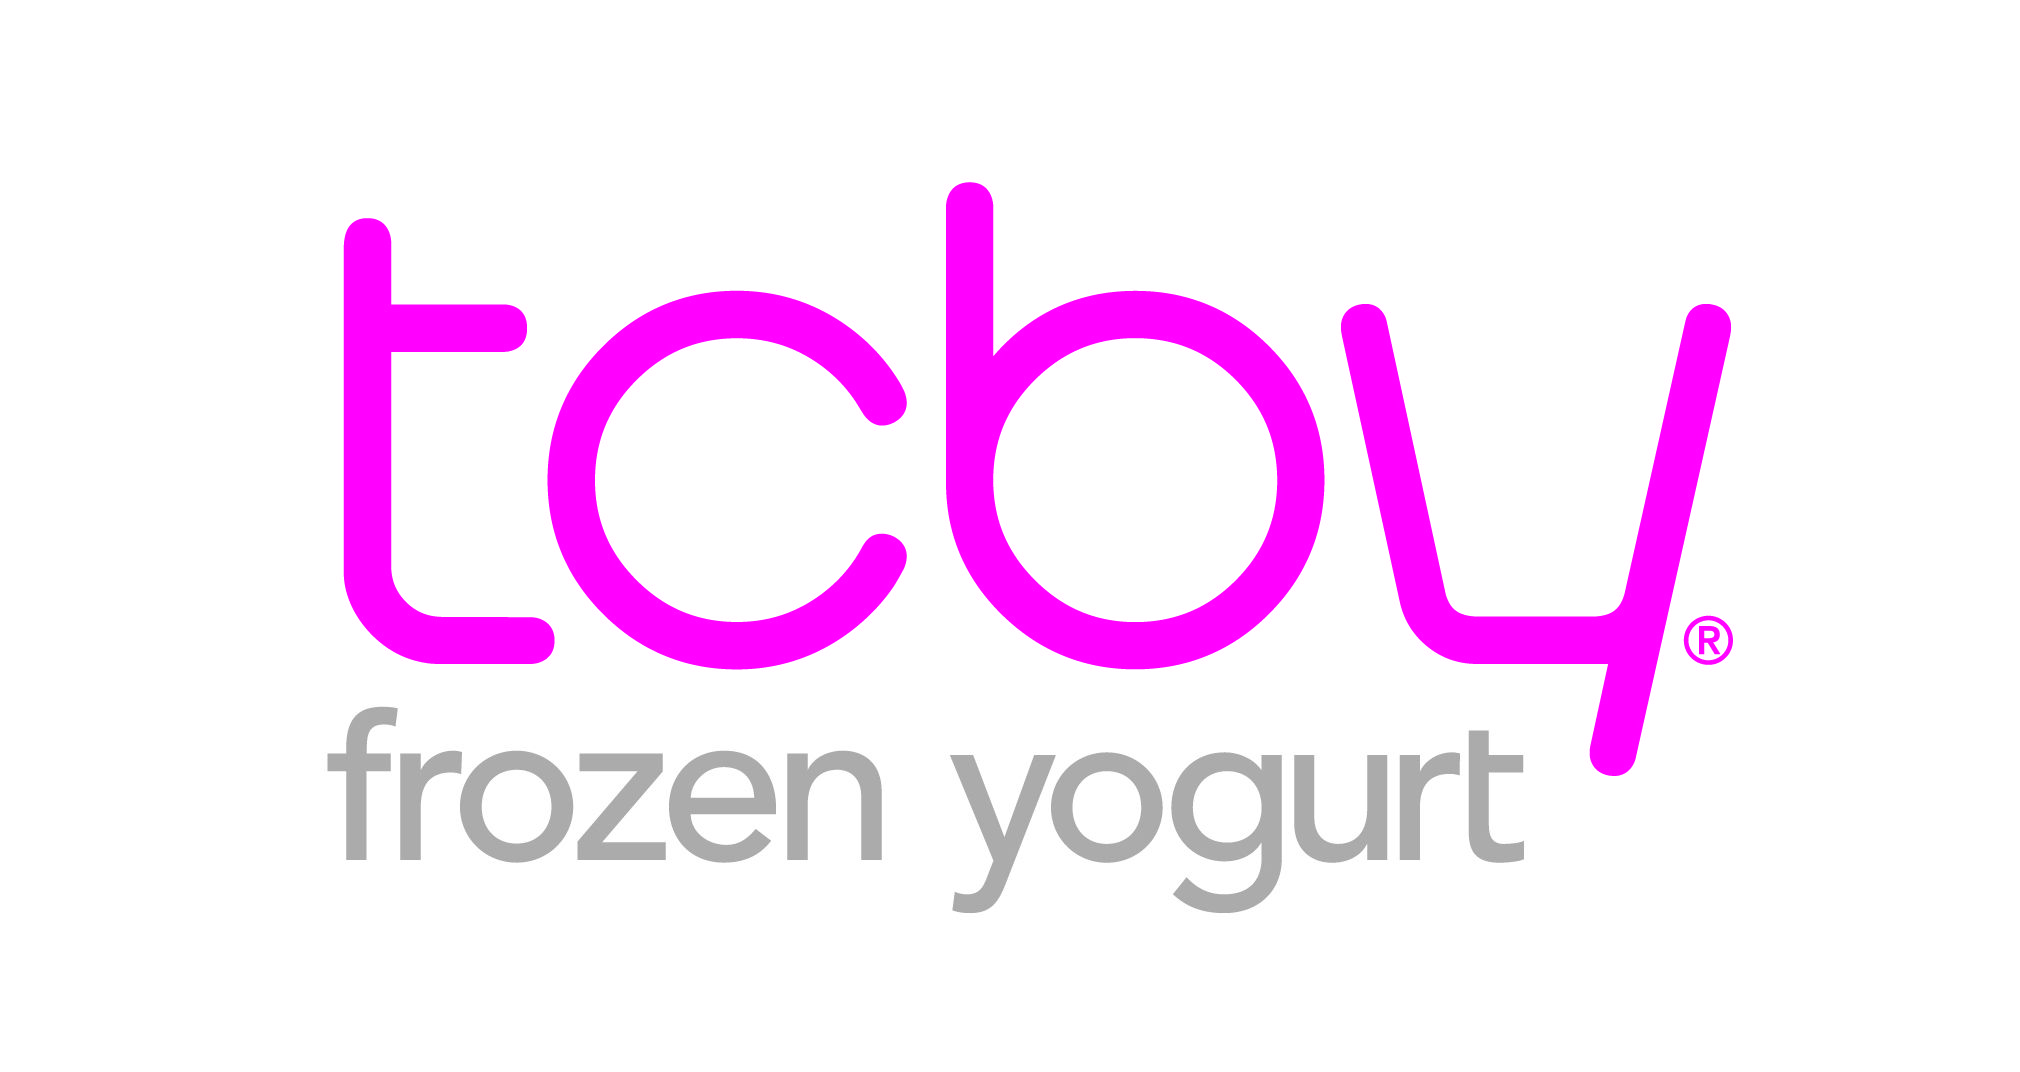 TCBY logo